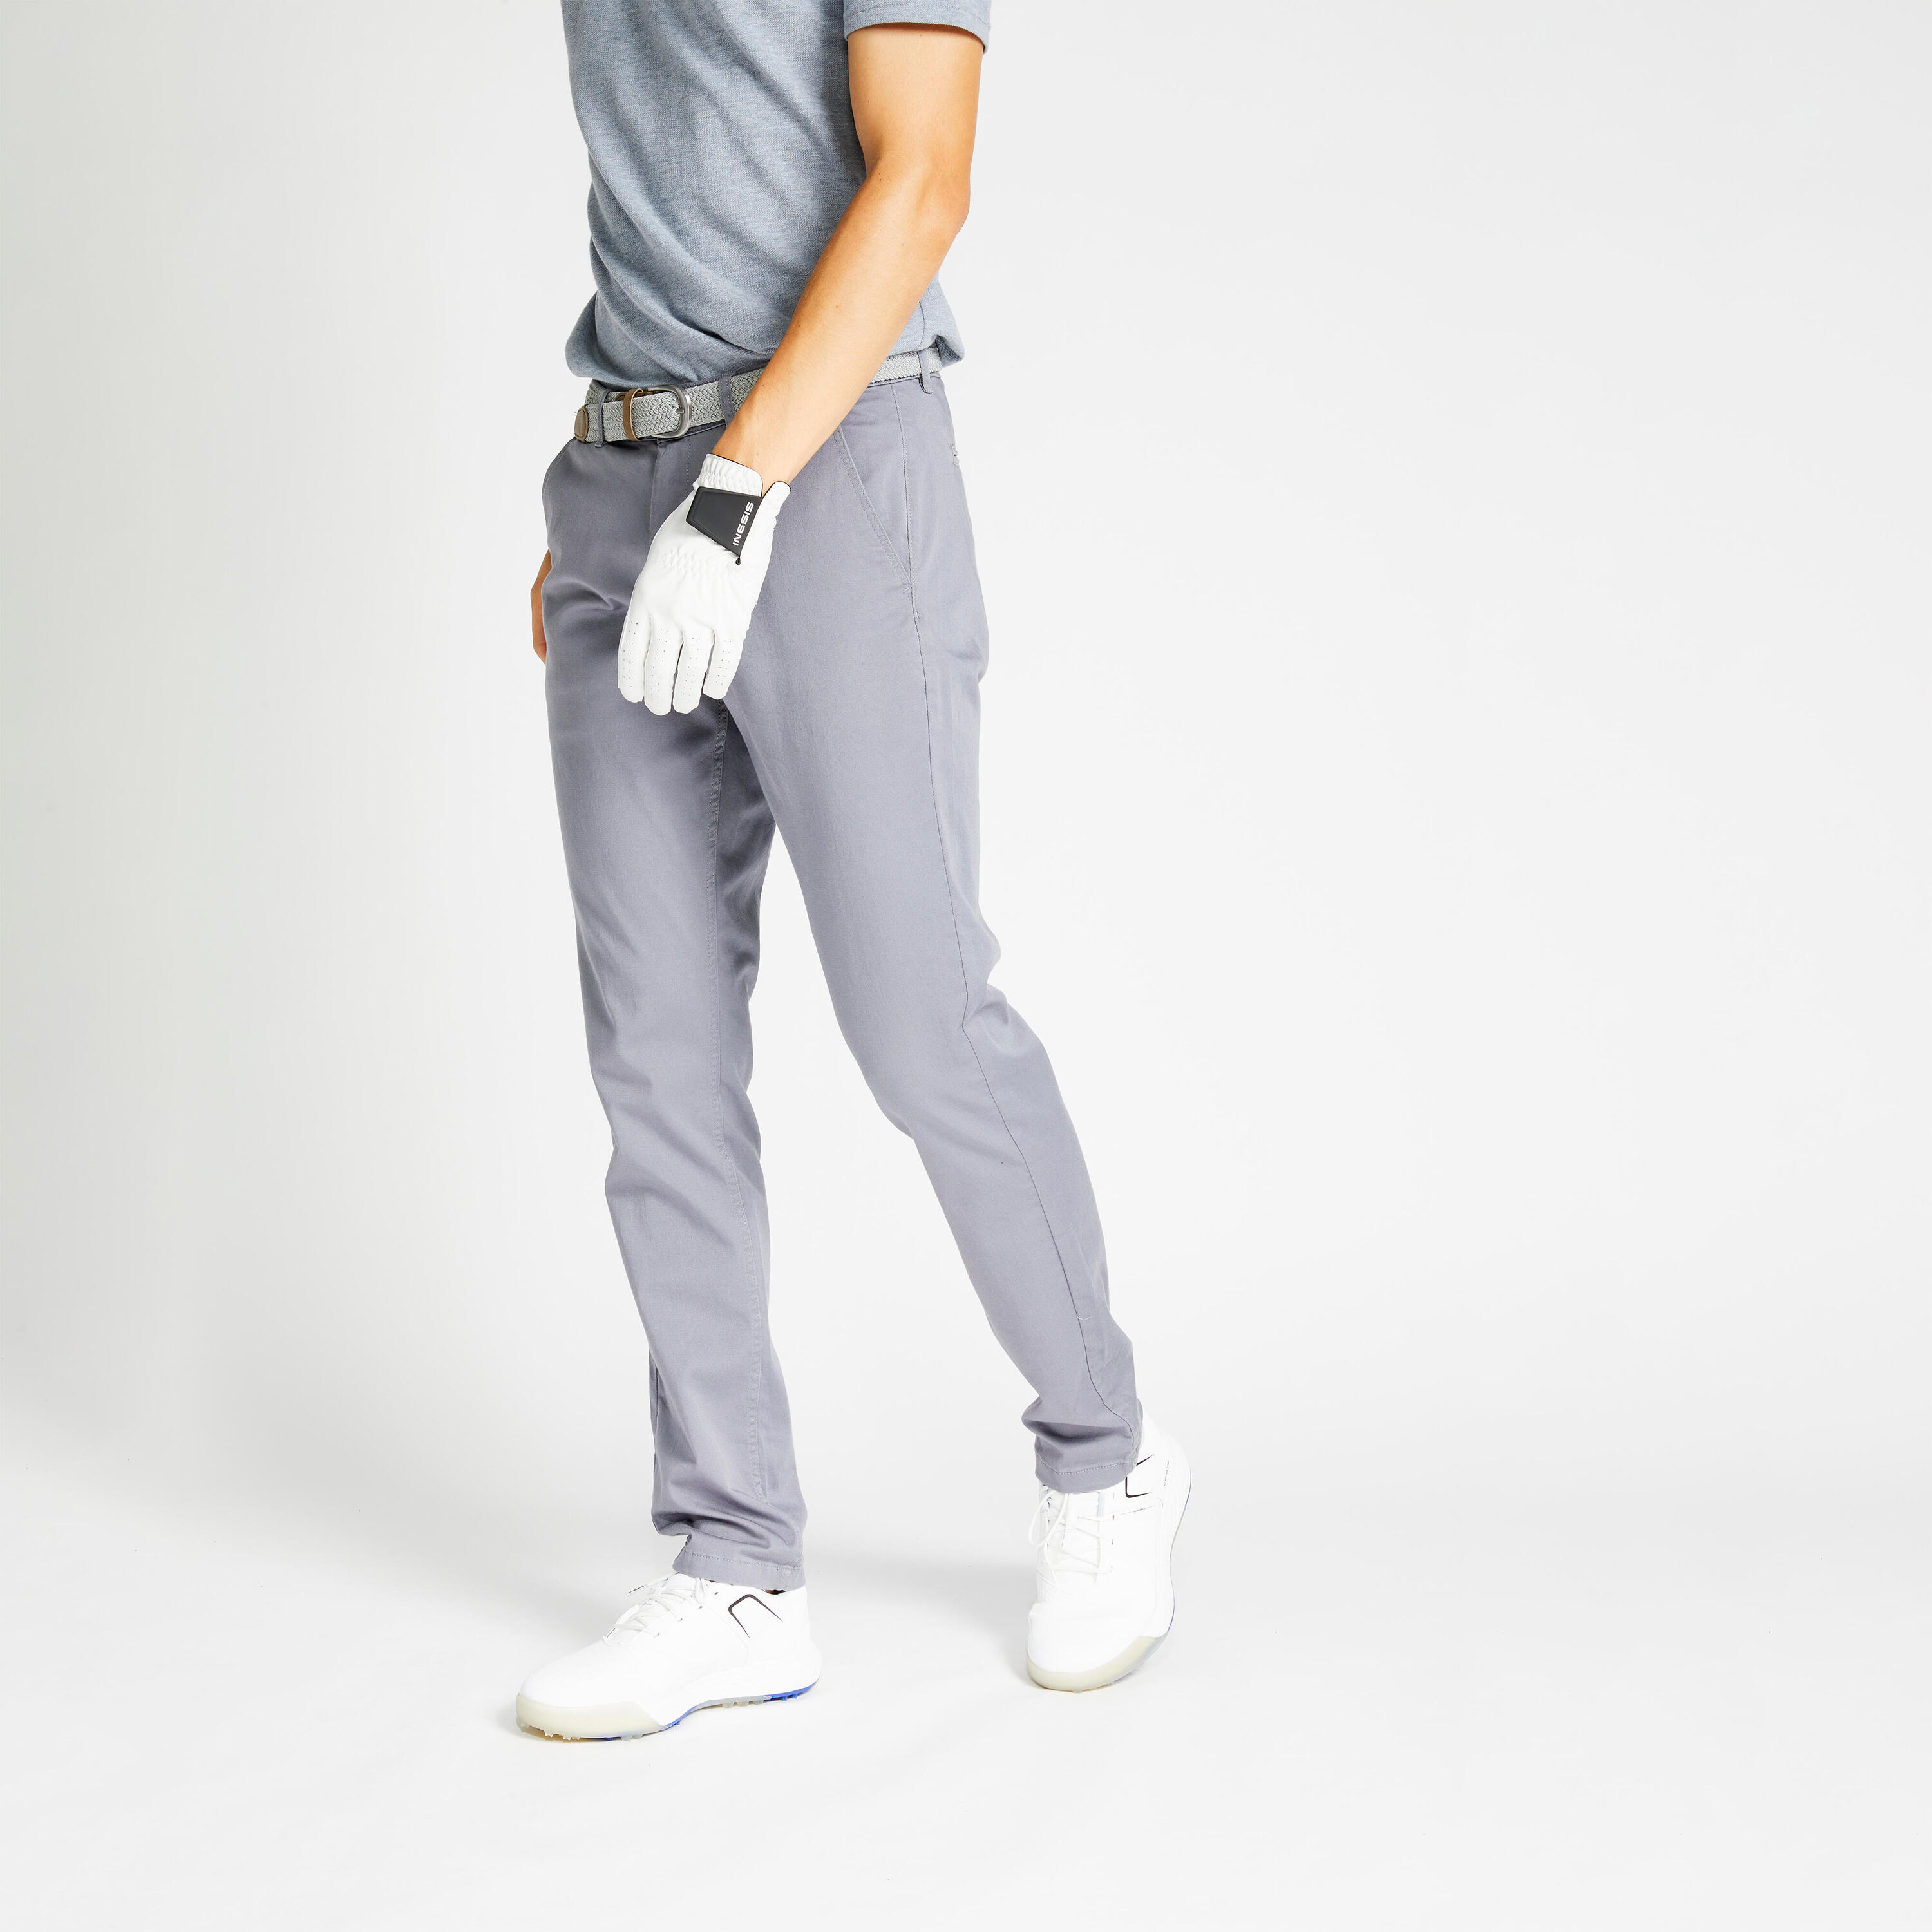 INESIS Men's golf trousers - MW500 grey